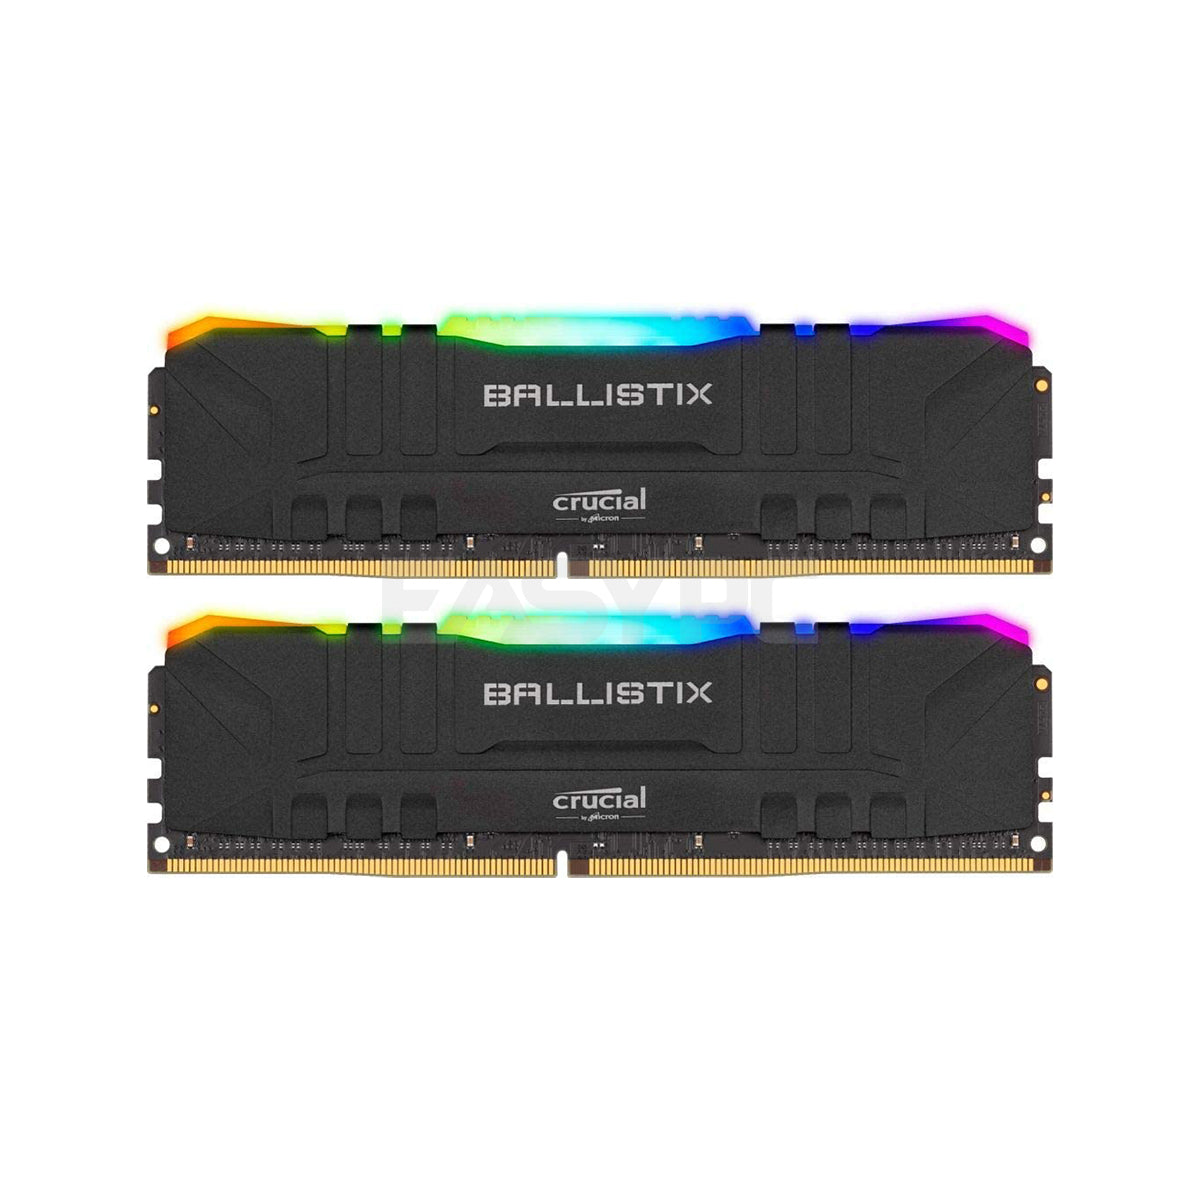 BALLISTIX - Mémoire PC RAM RGB - 16Go (2x8Go) - 3200MHz - DDR4